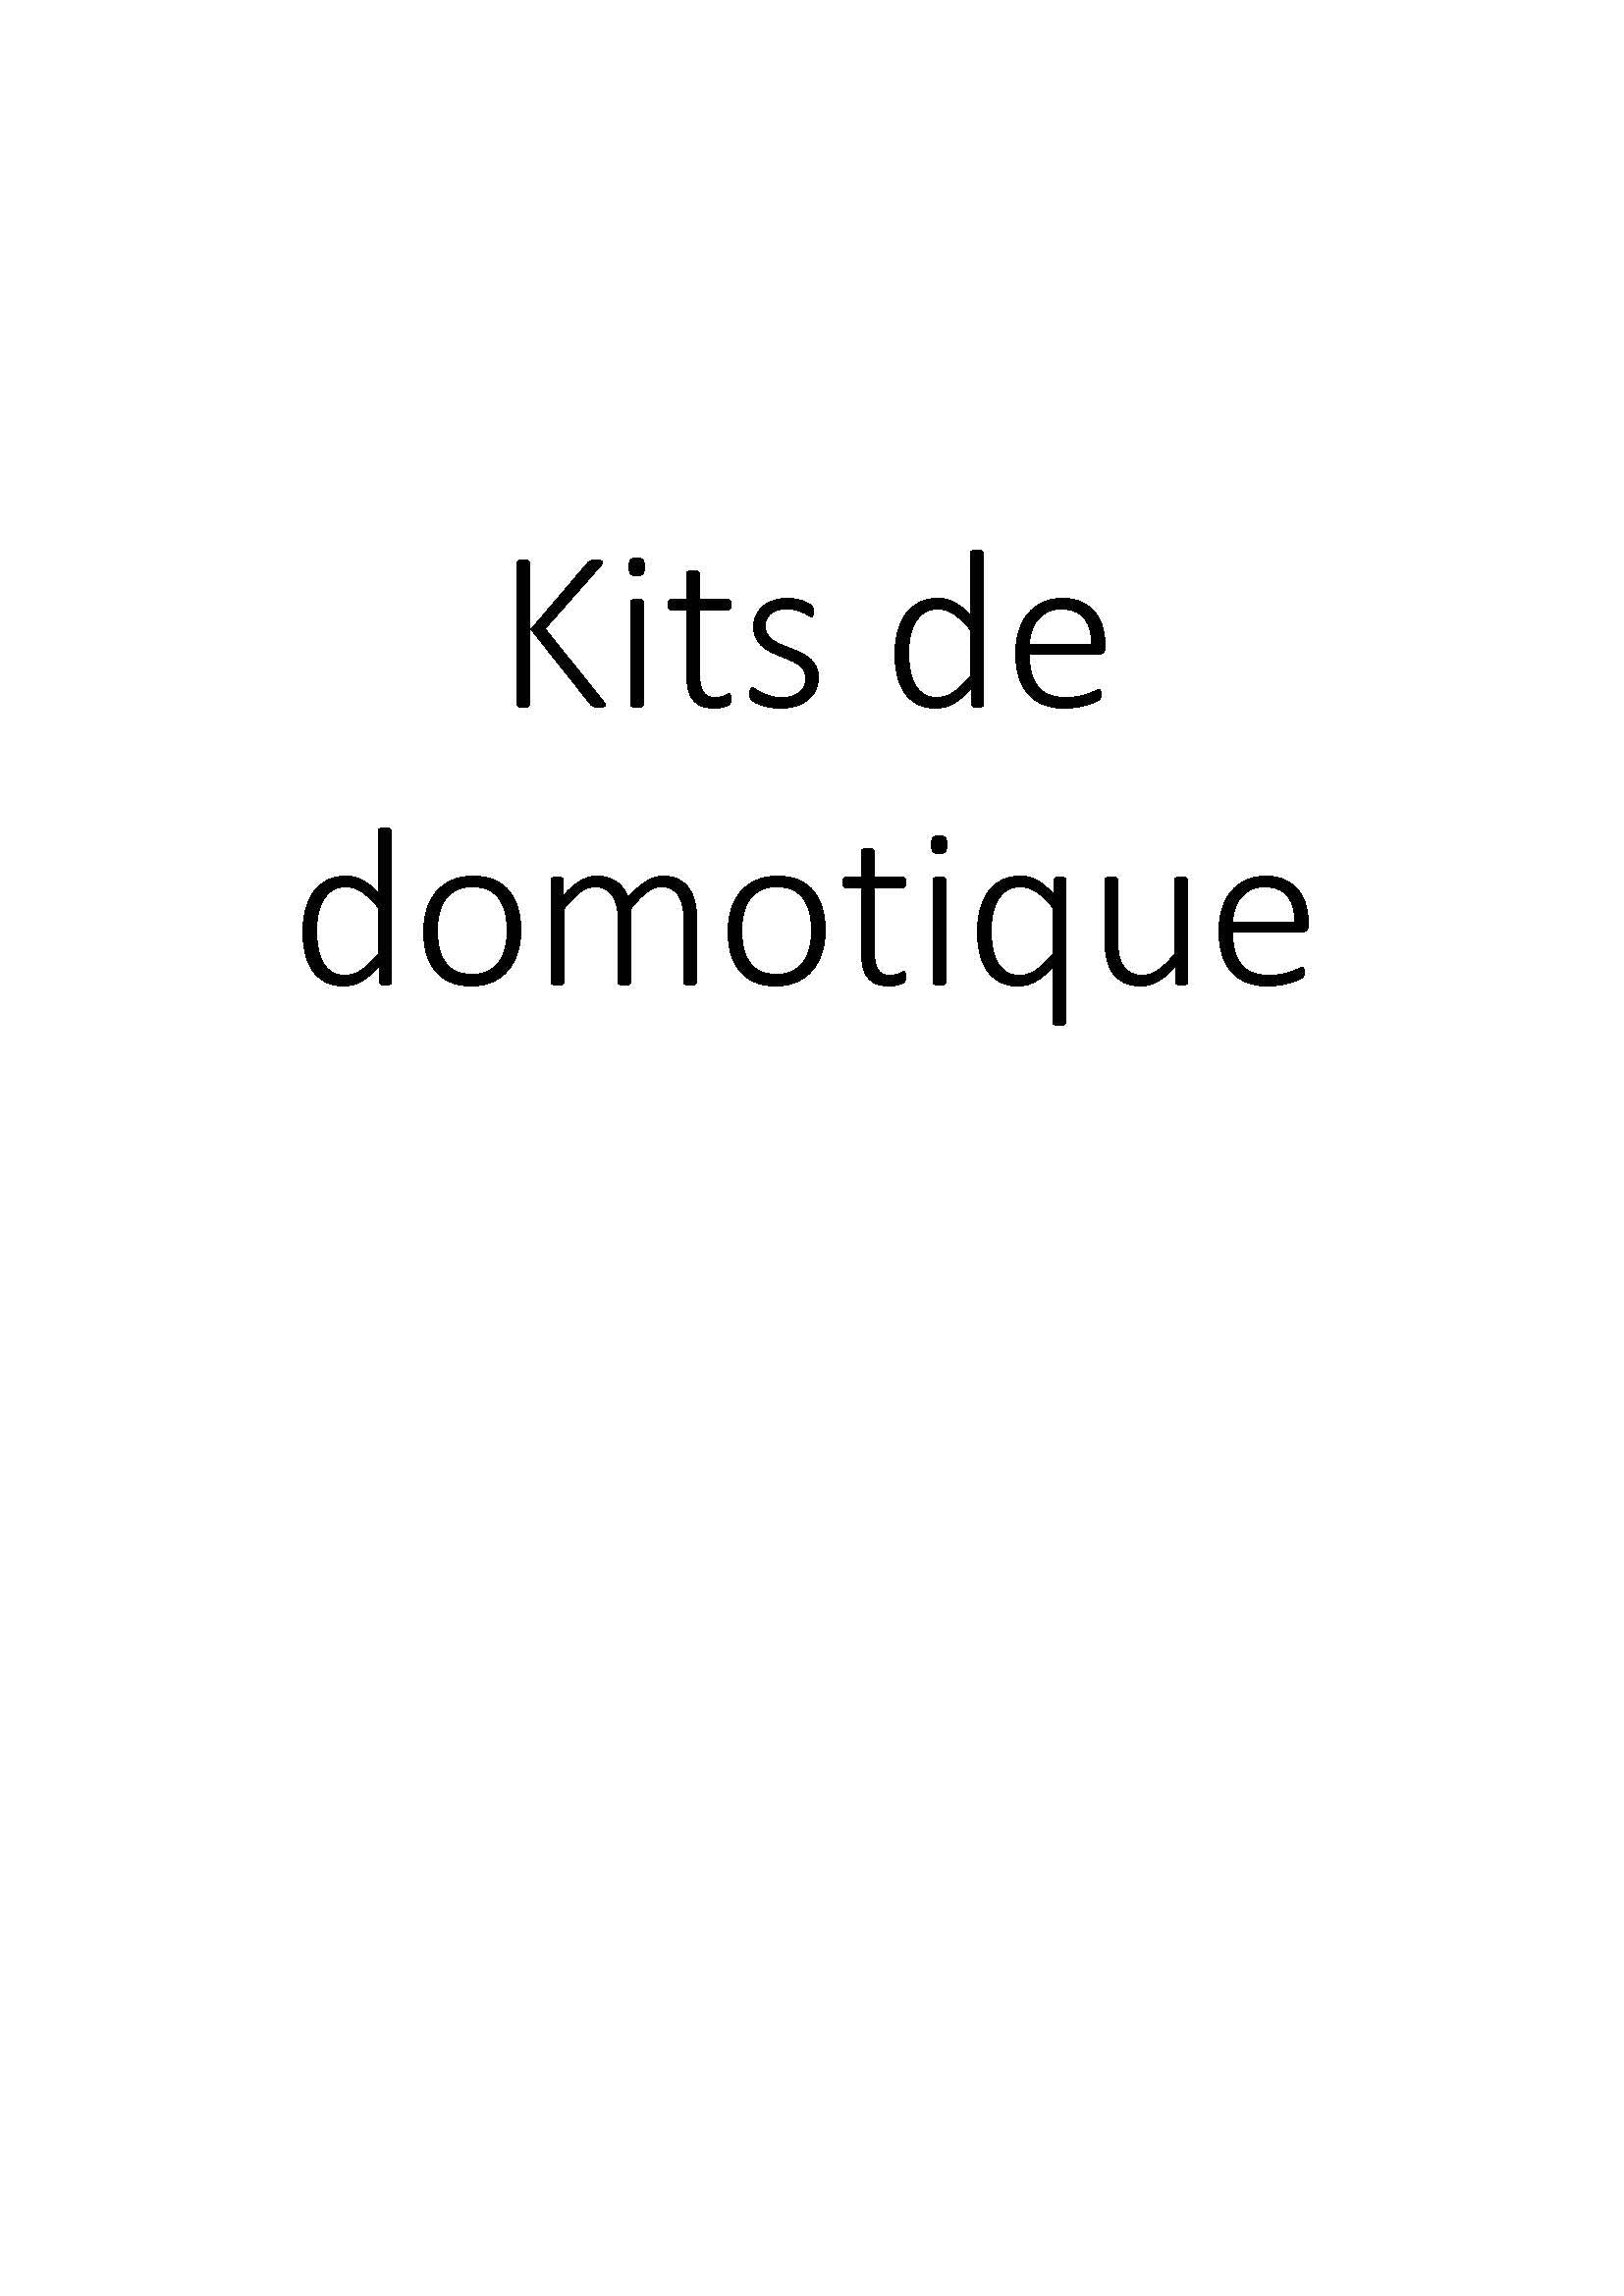 Kits de domotique clicktofournisseur.com